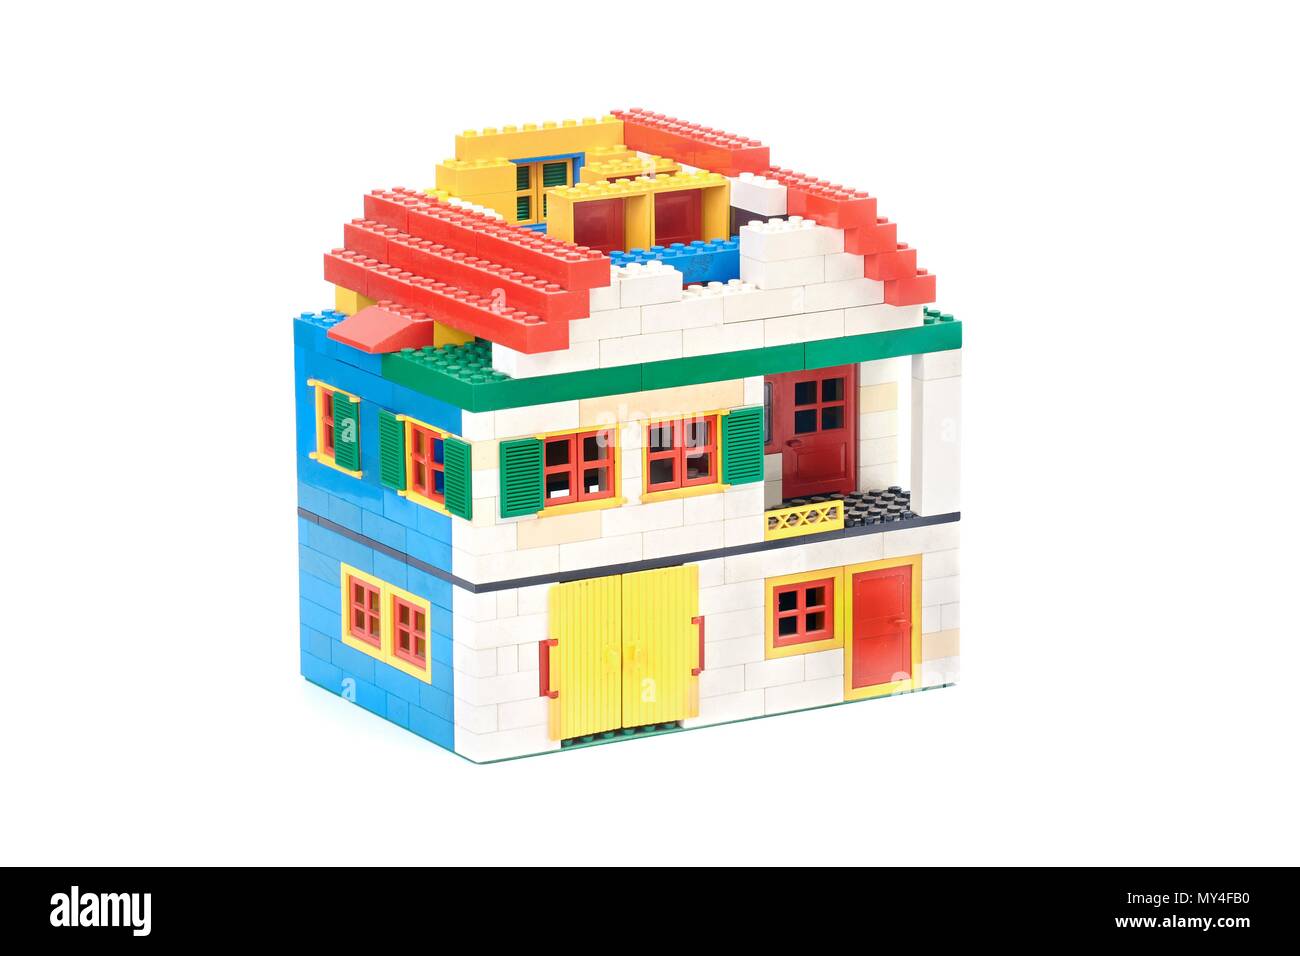 Lego Brick House Stockfotografie - Alamy